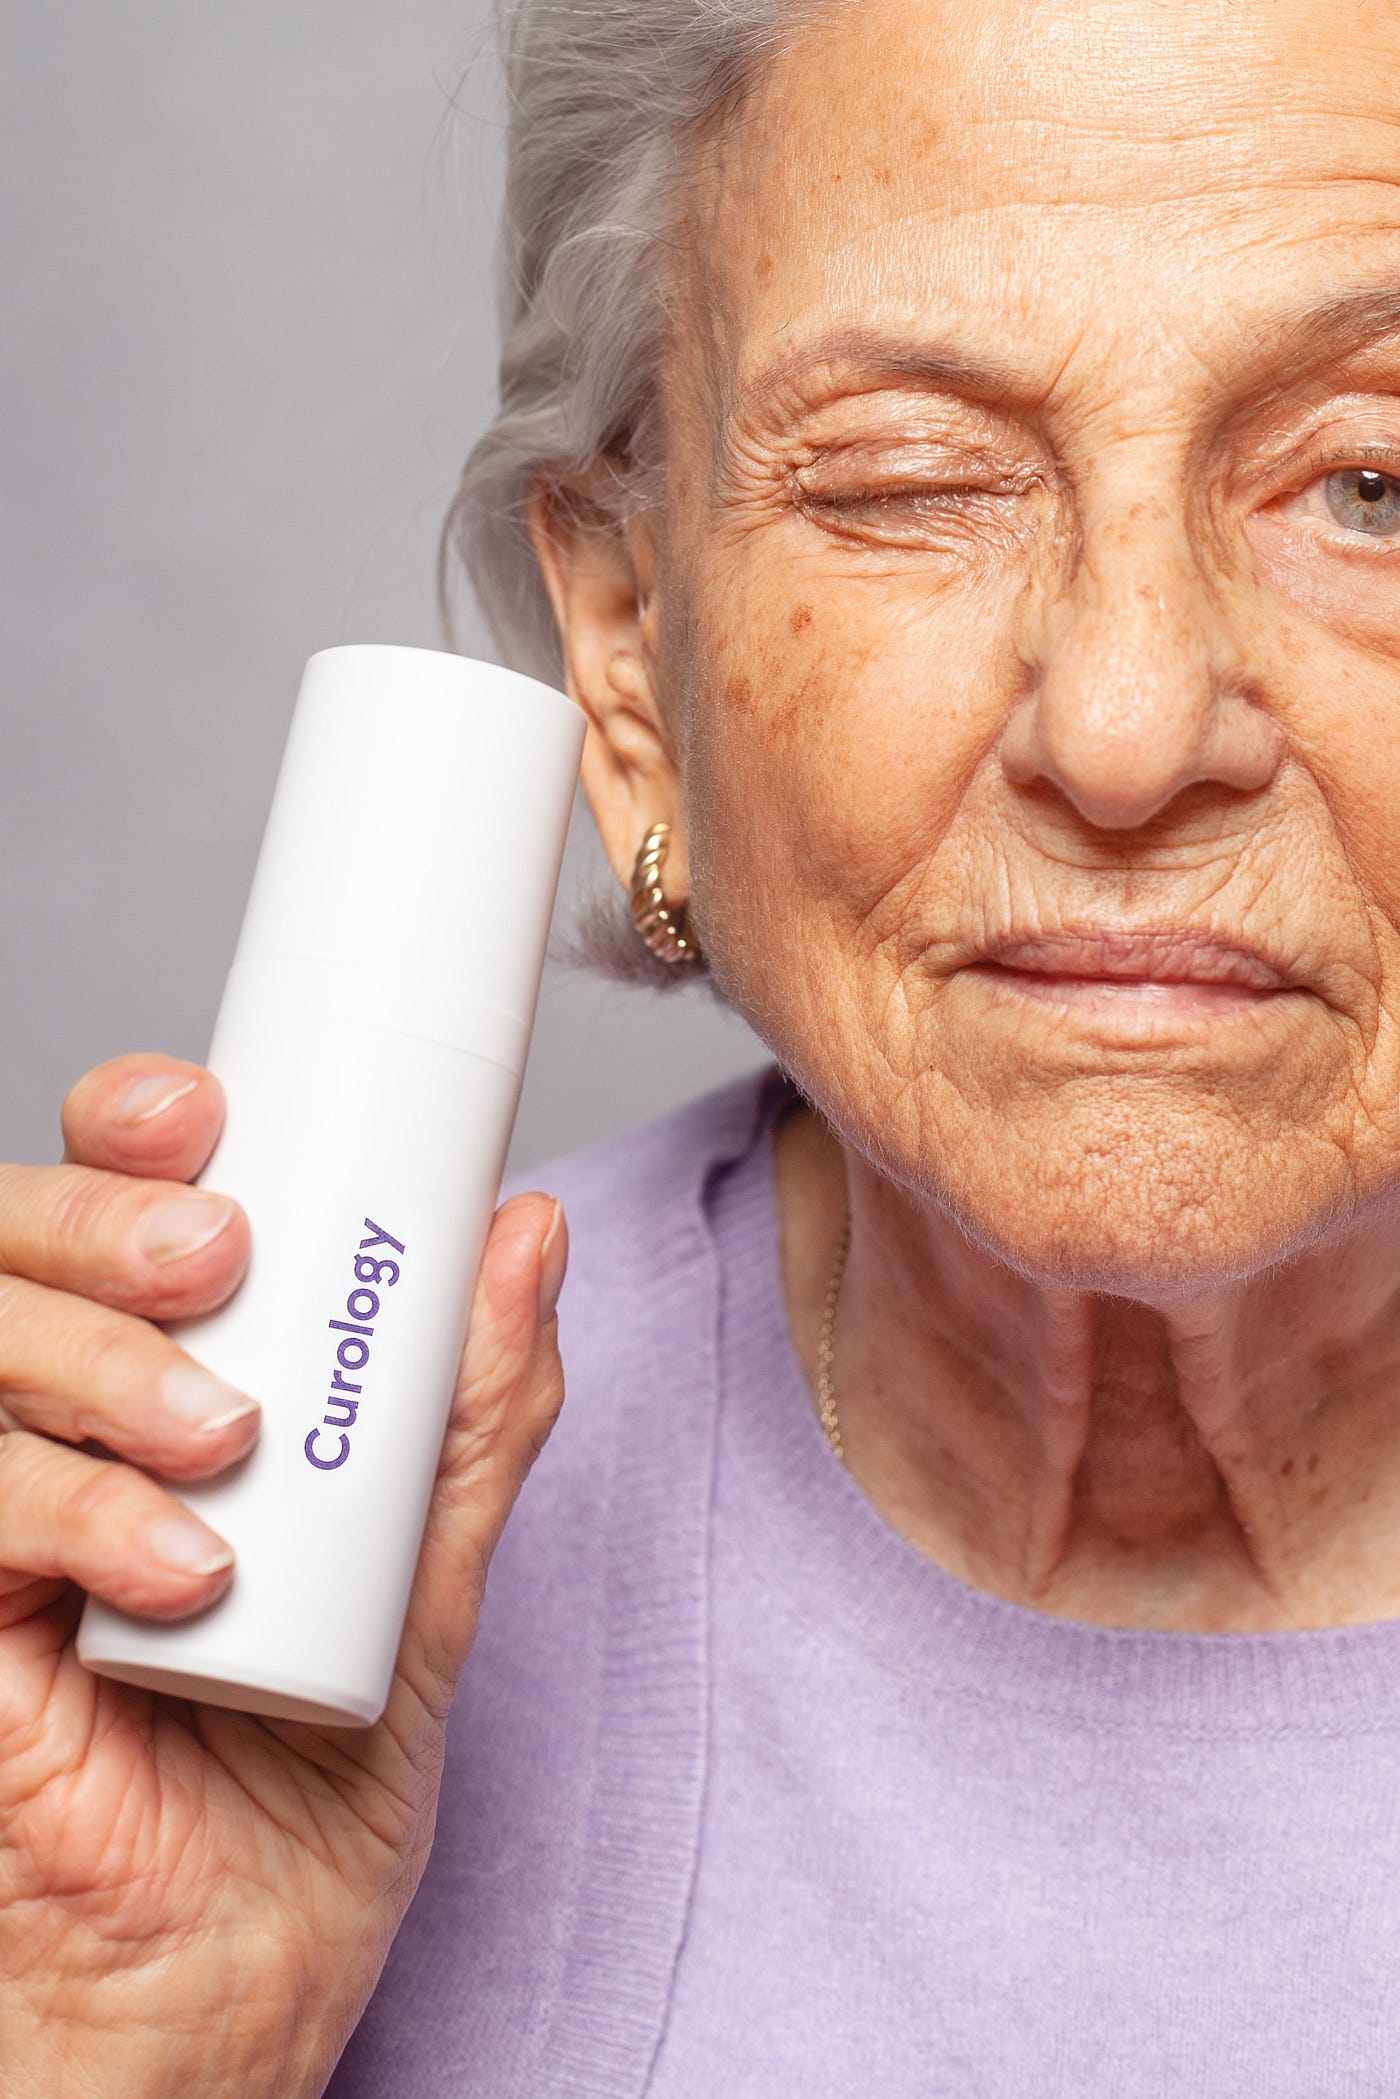 Woman holding anti-ageing secret formula